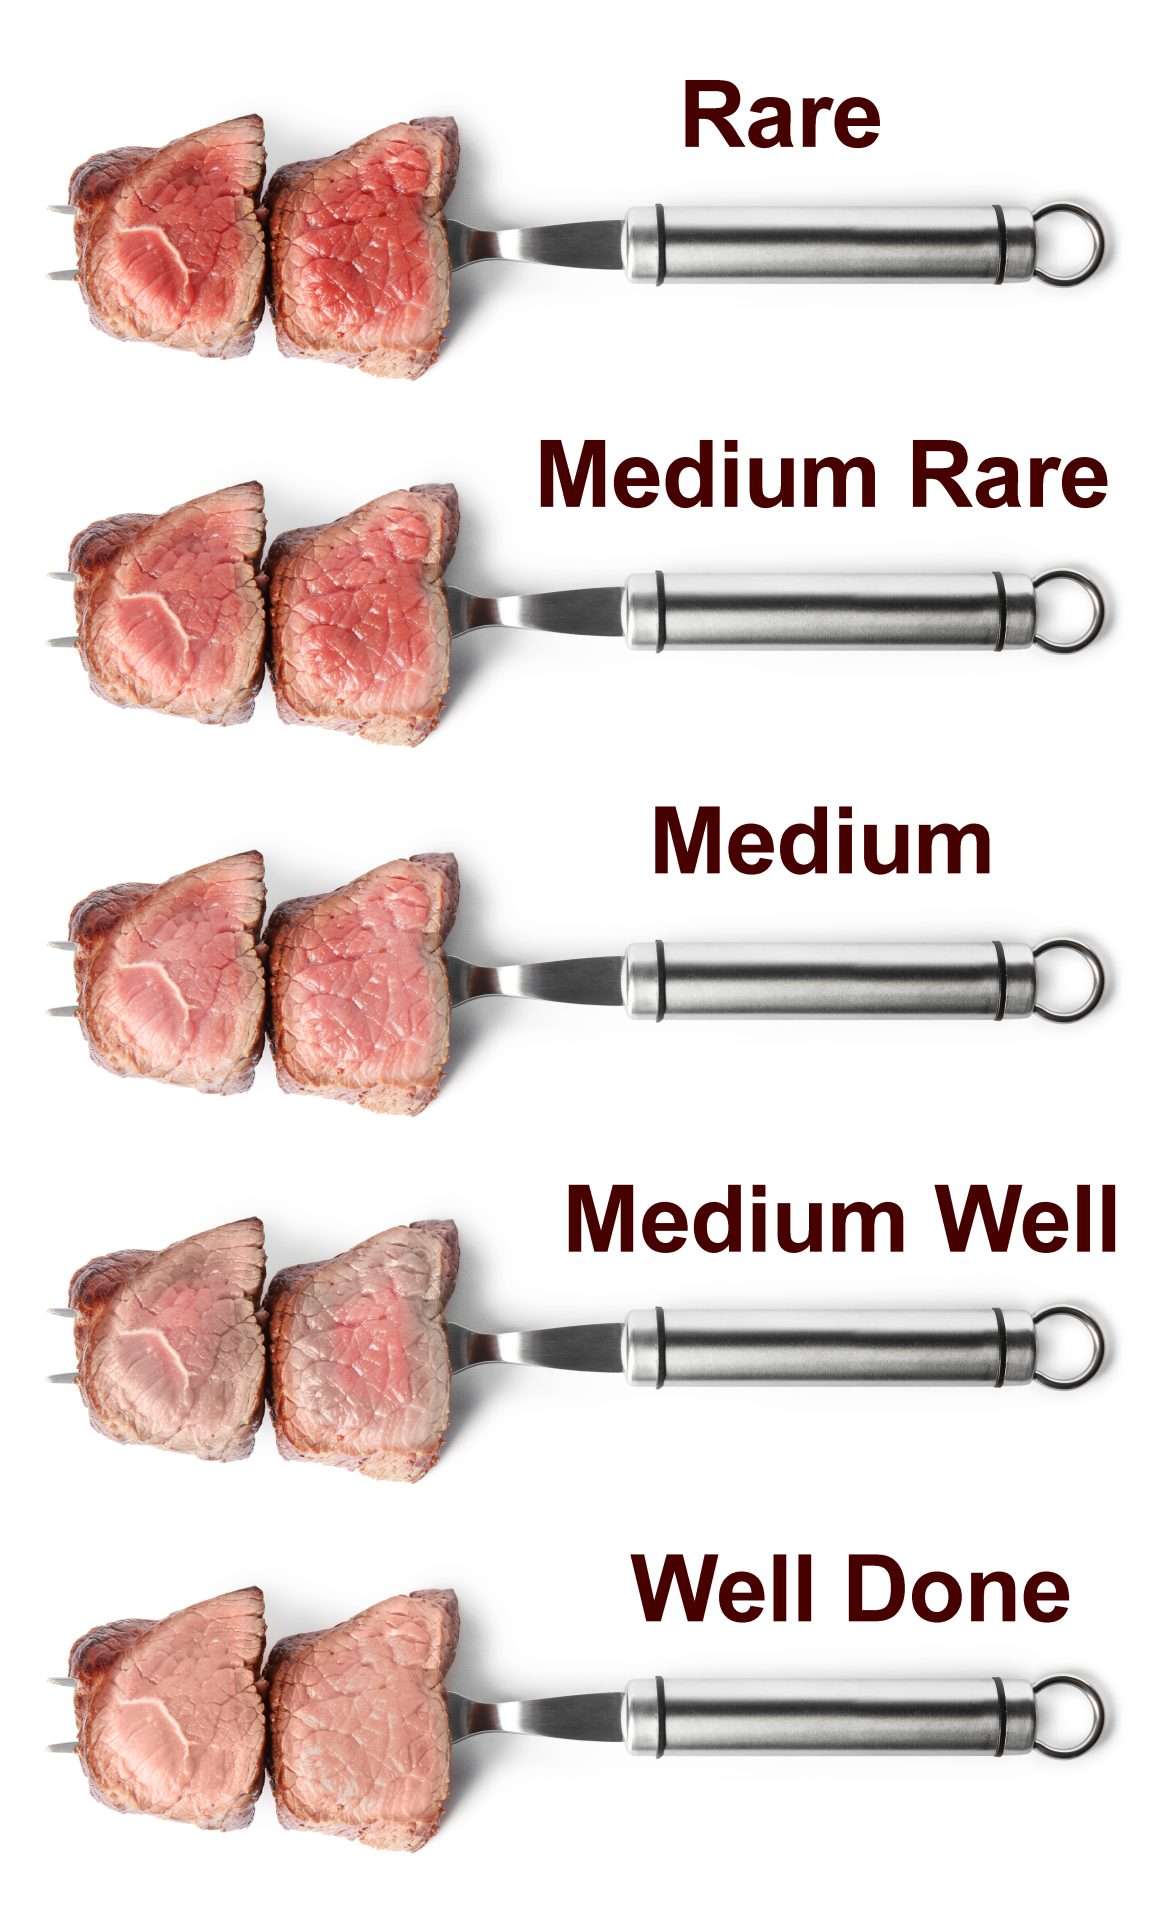 Steak doneness chart